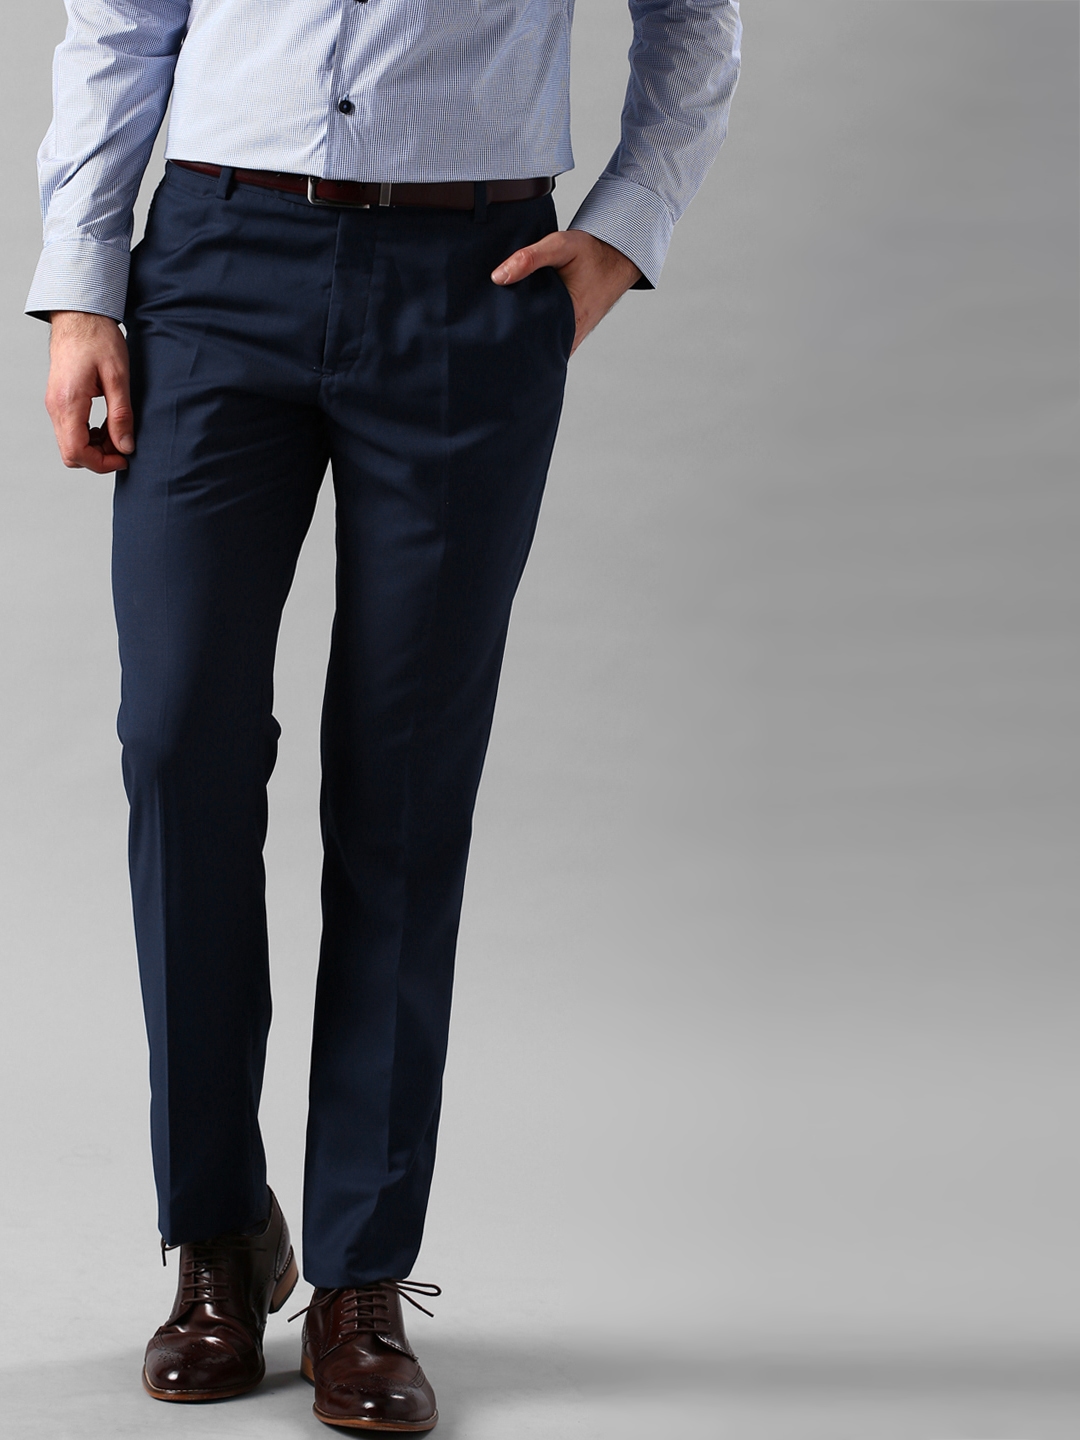 Men Formal Pant Teal Blue Office Pant Wedding Formal Trouser Sainly– SAINLY-atpcosmetics.com.vn